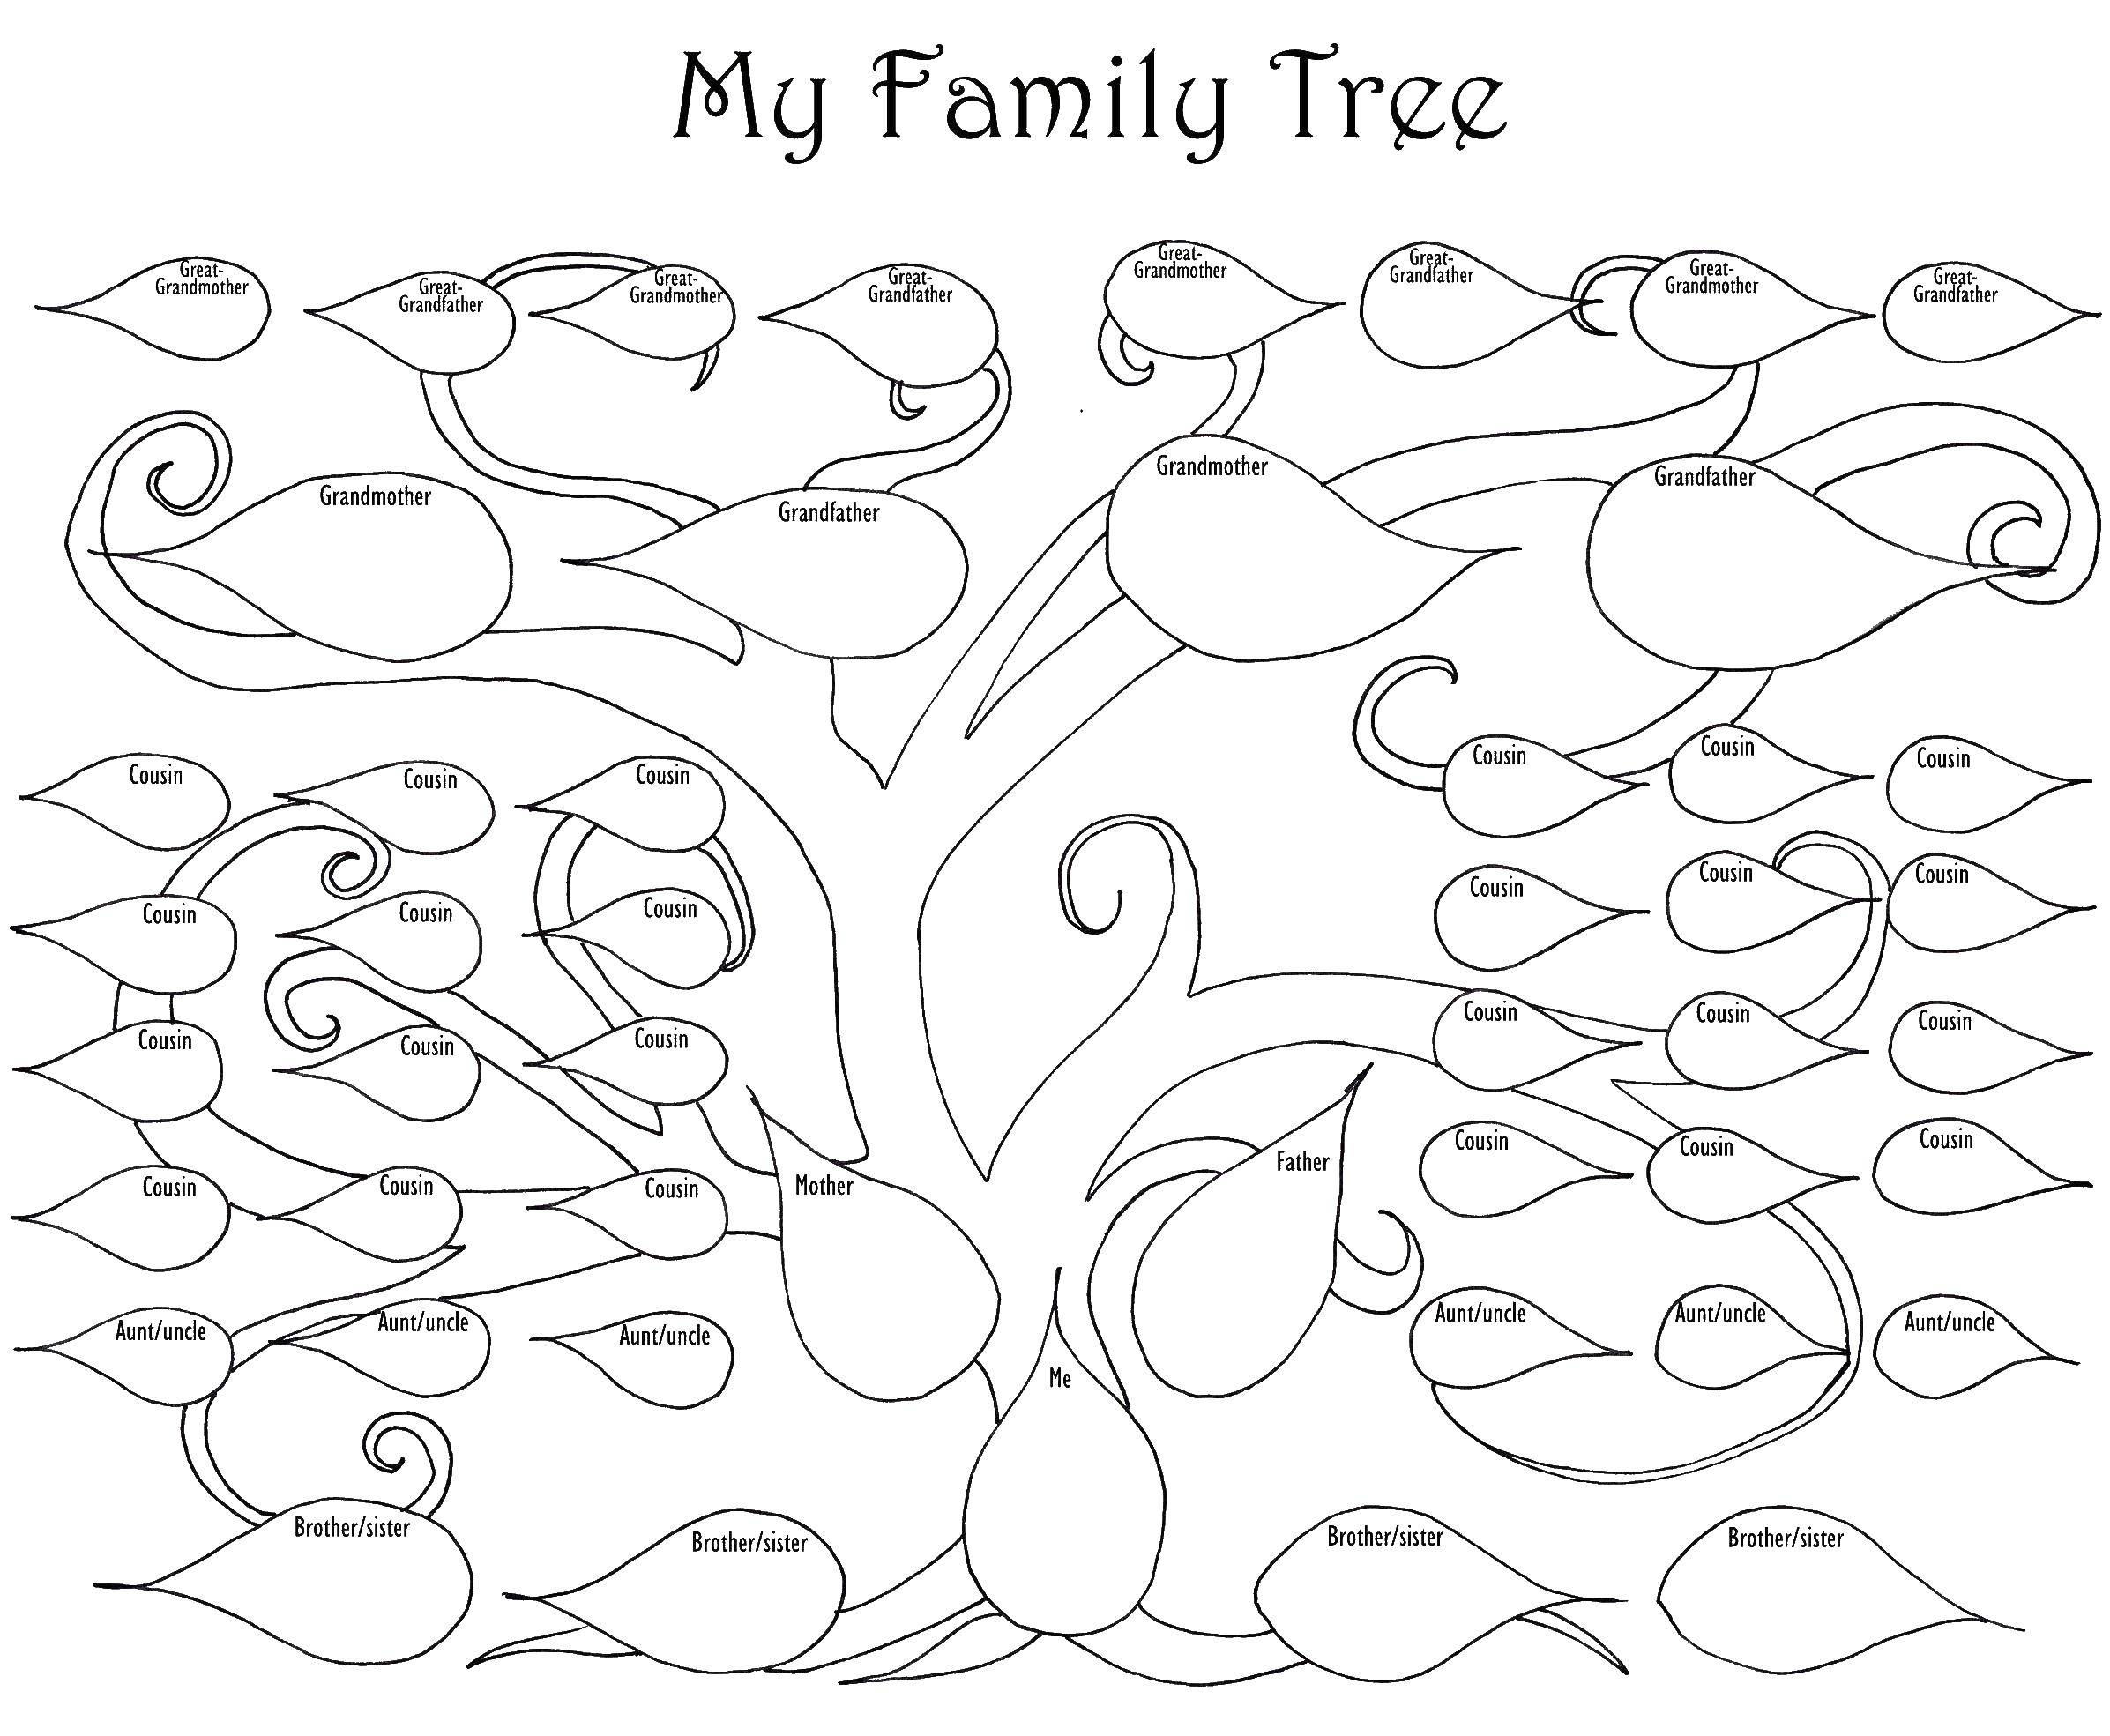 Название: Раскраска Семейное дерево. Категория: Семейное дерево. Теги: Семейное дерево.